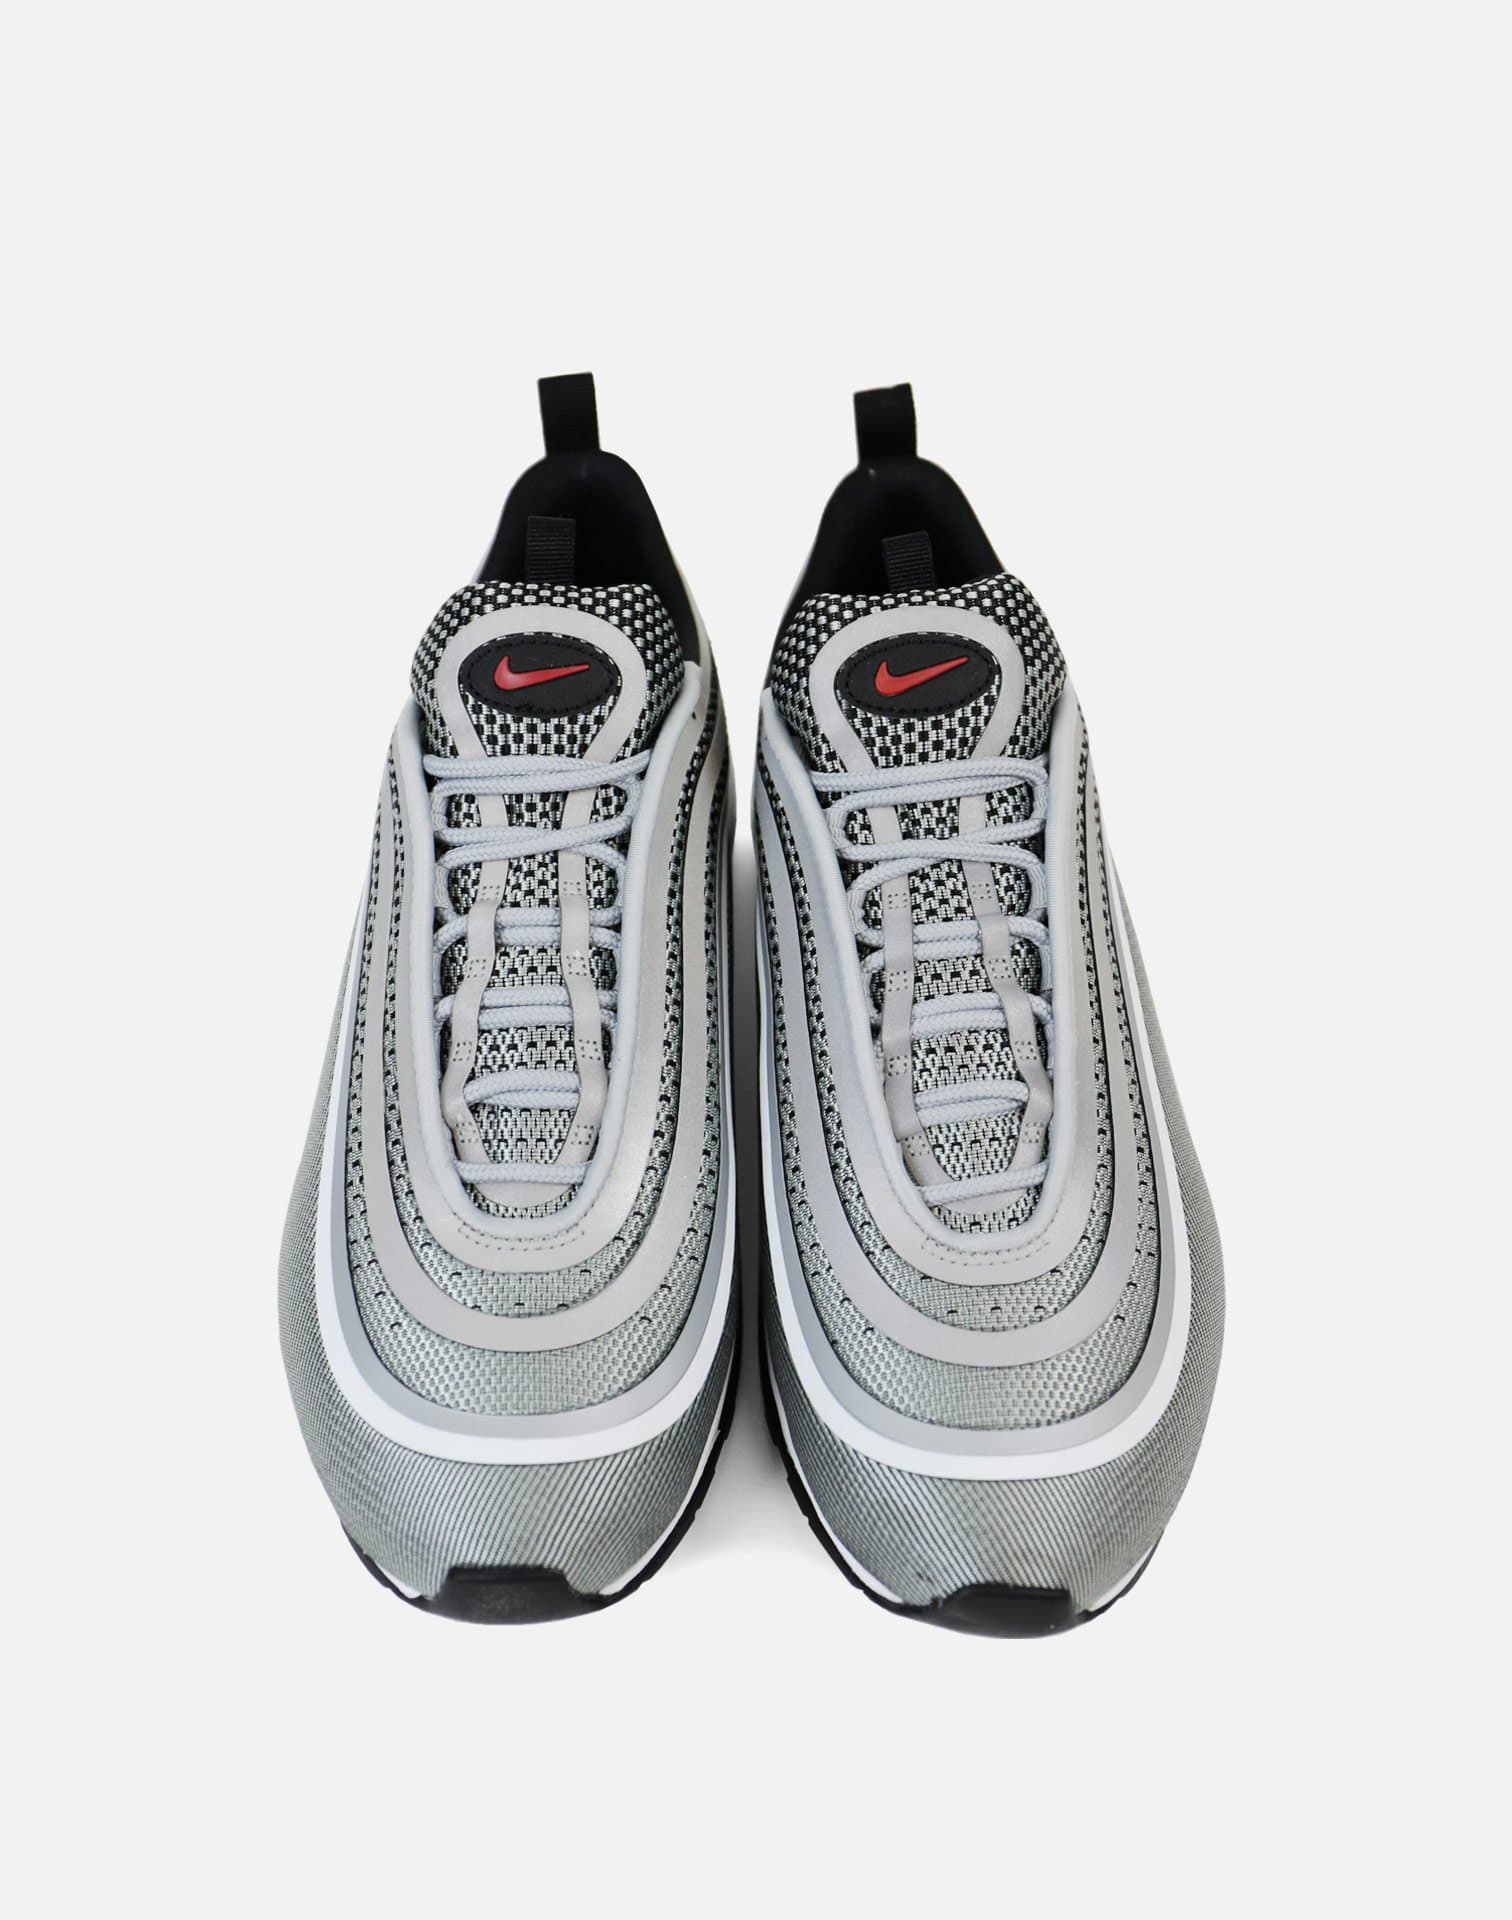 Nike Air Max '97 Ultra (Metallic Silver/Varsity Red-Black)